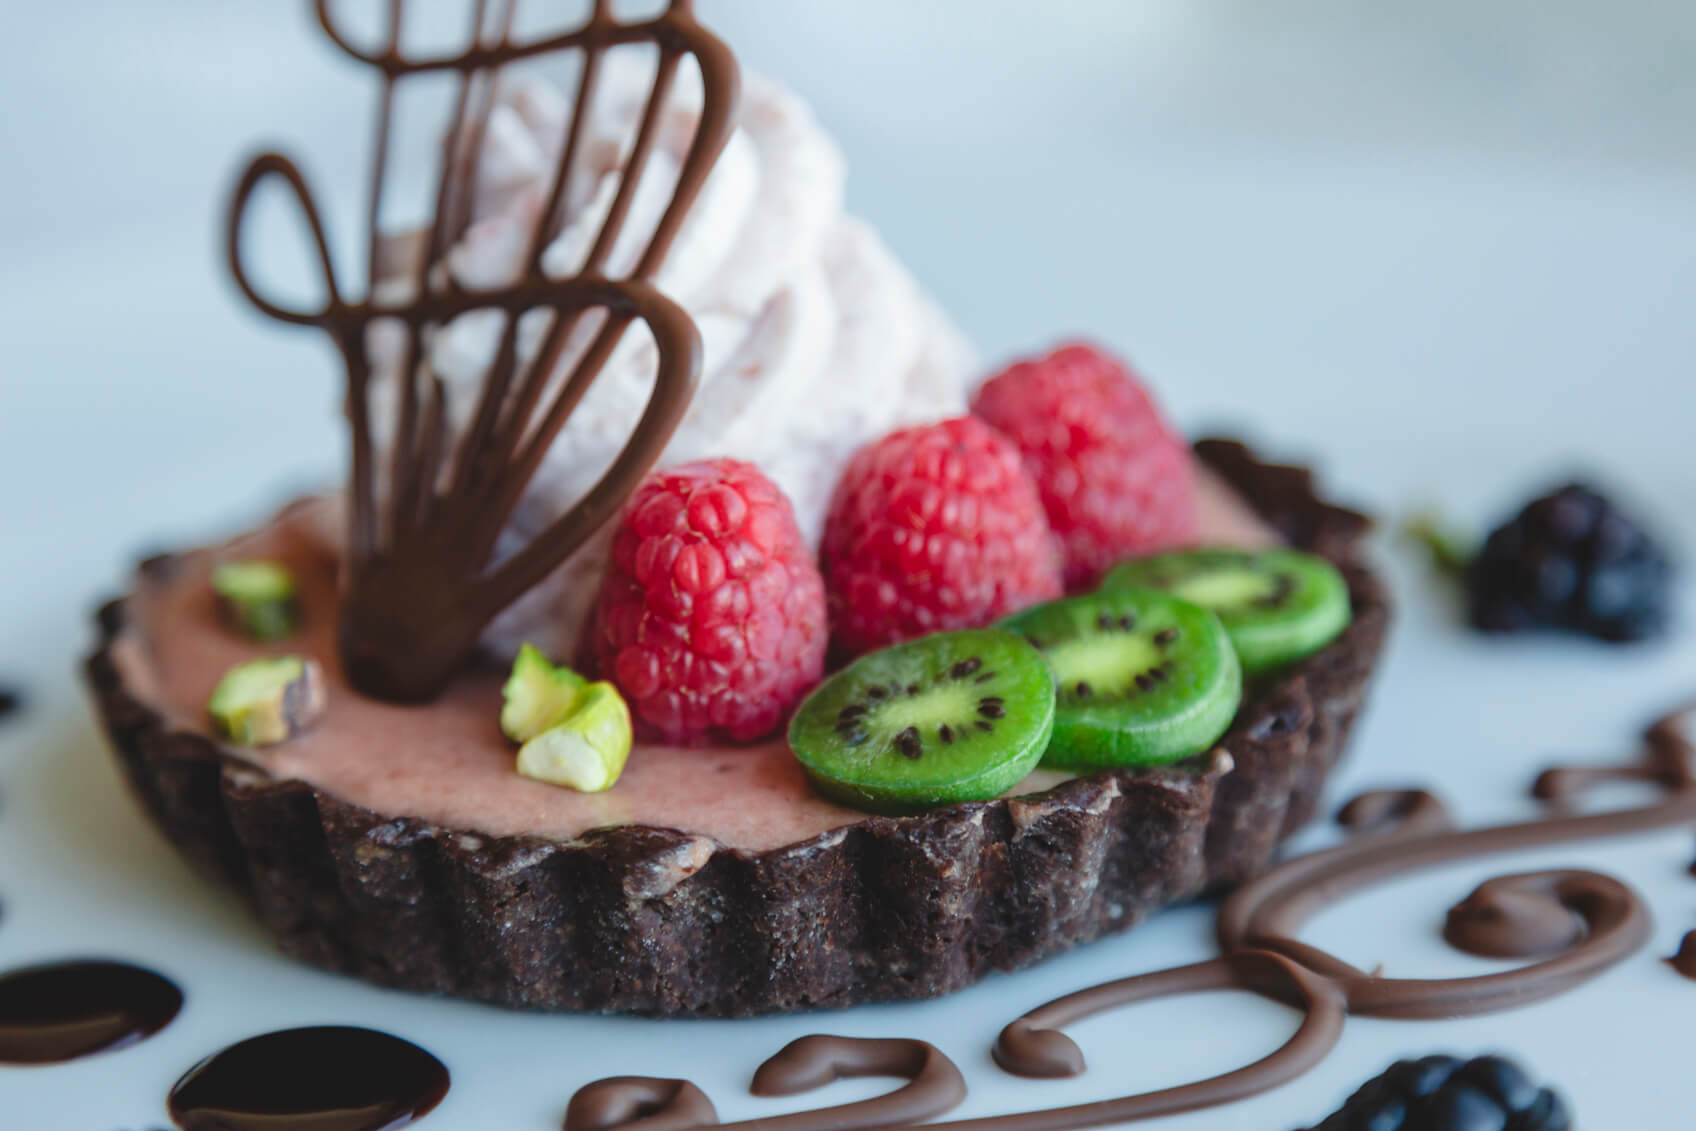 This chocolate cherry tart is the perfect dessert all year round.